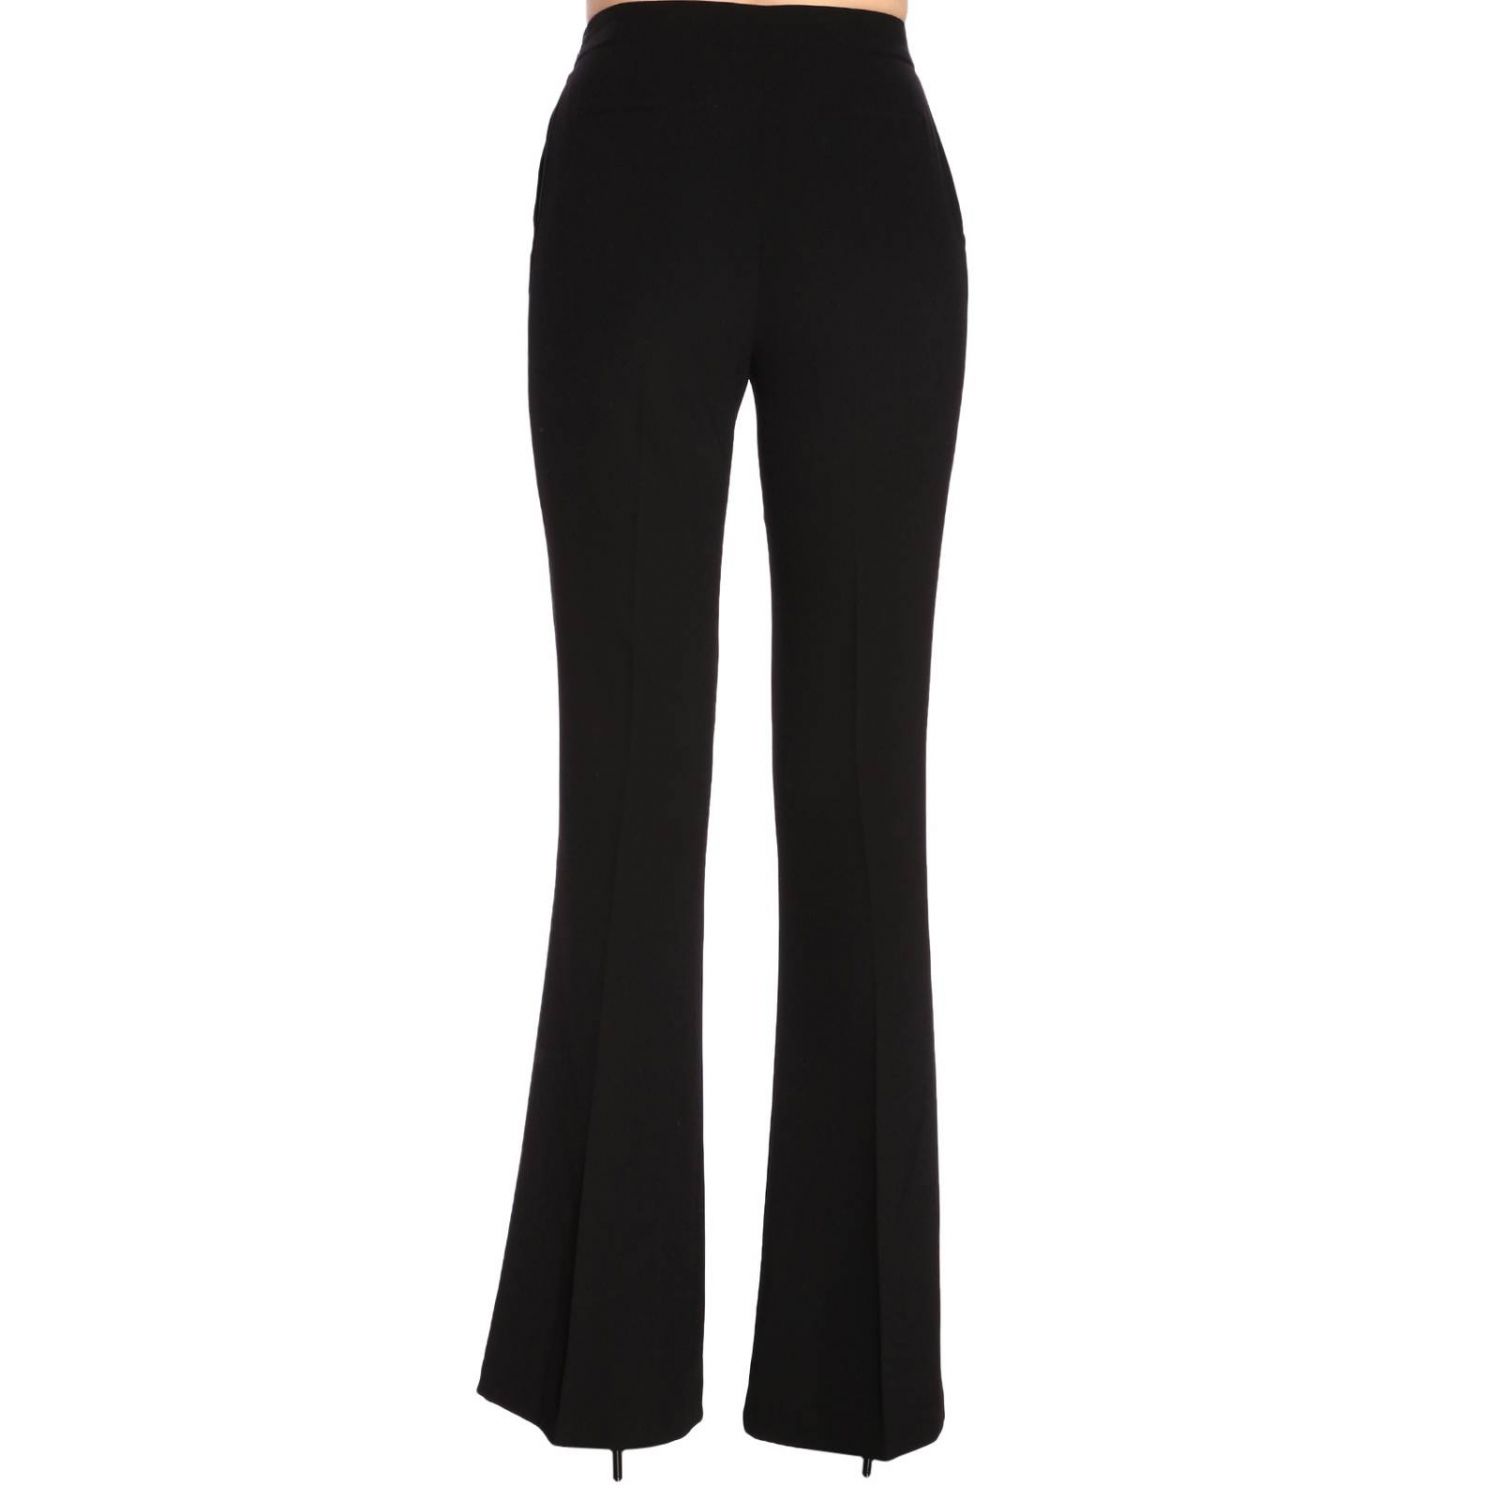 Elisabetta Franchi Outlet: Pants women - Black | Pants Elisabetta ...